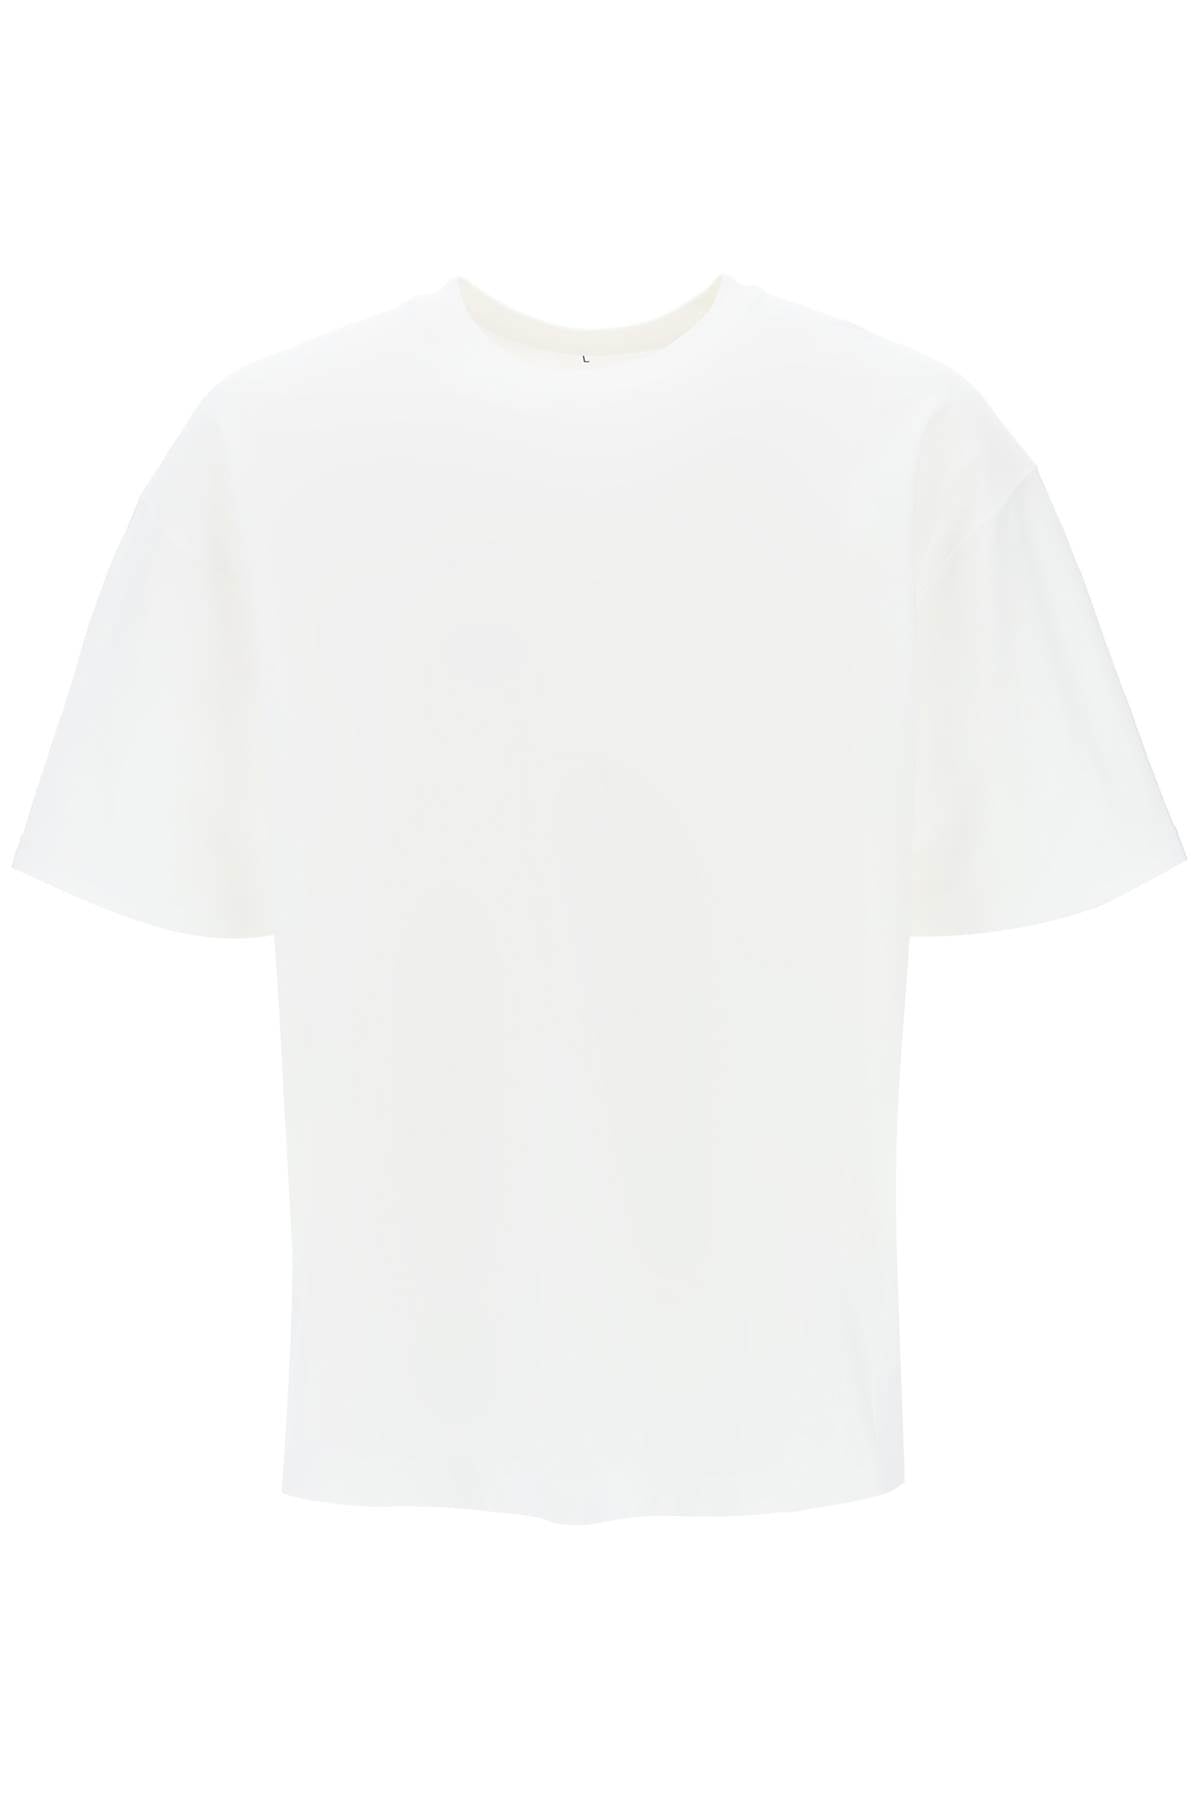 Carhartt wip organic cotton dawson t-shirt for-0